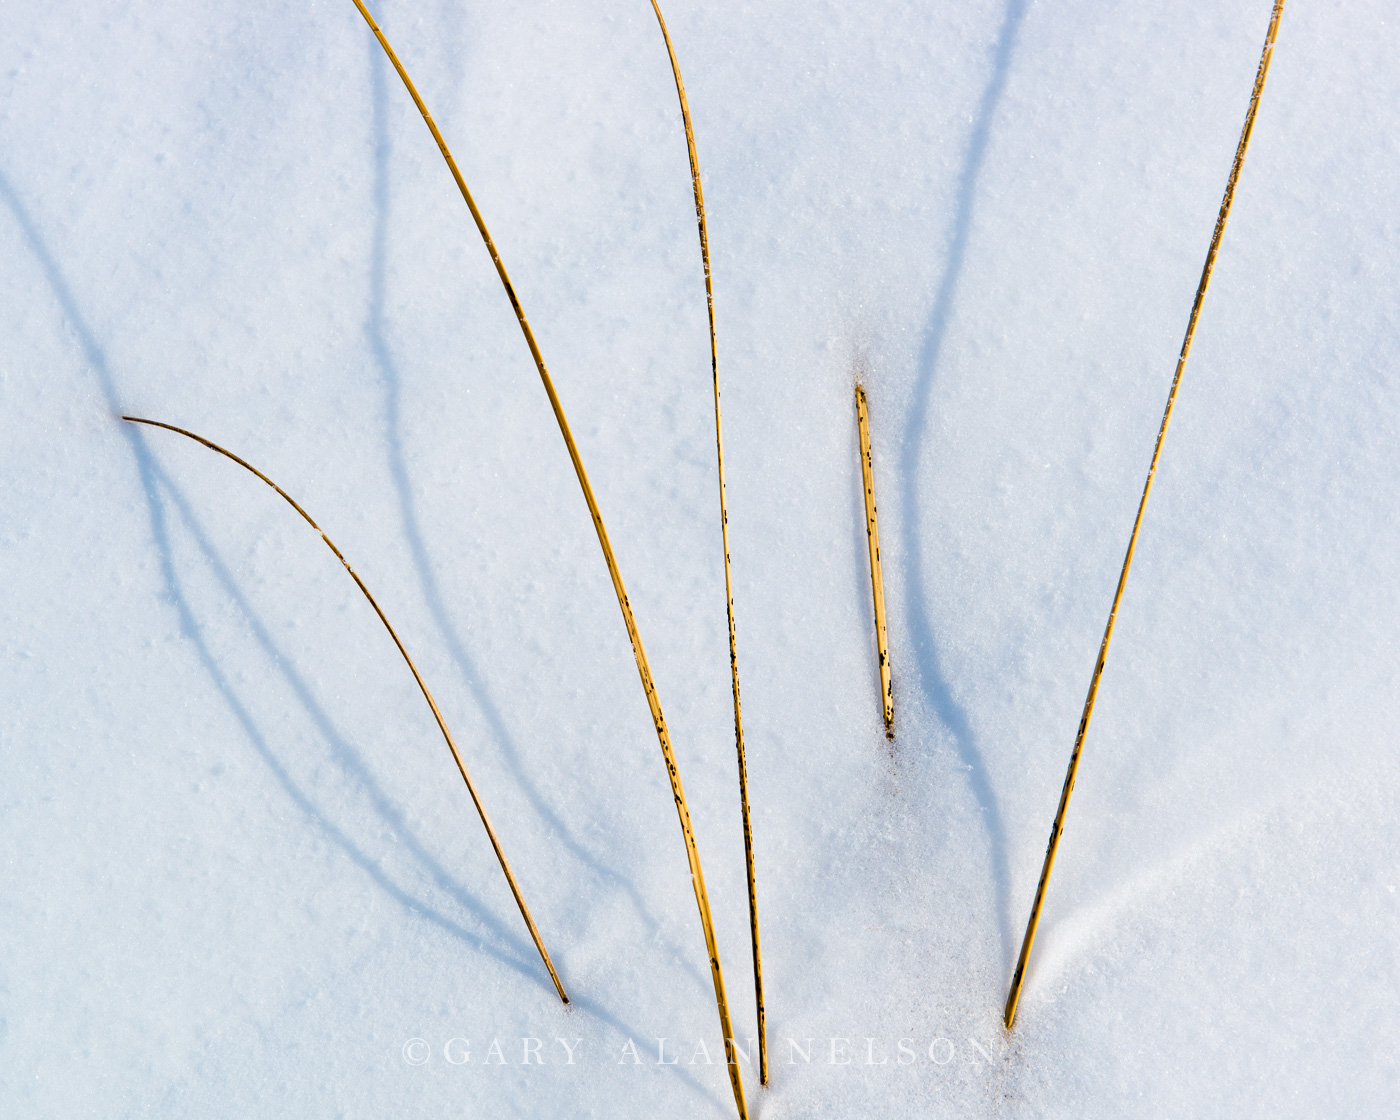 Hoar frost covered grasses, the Plover Prairie, Nature Conservancy, Minnesota